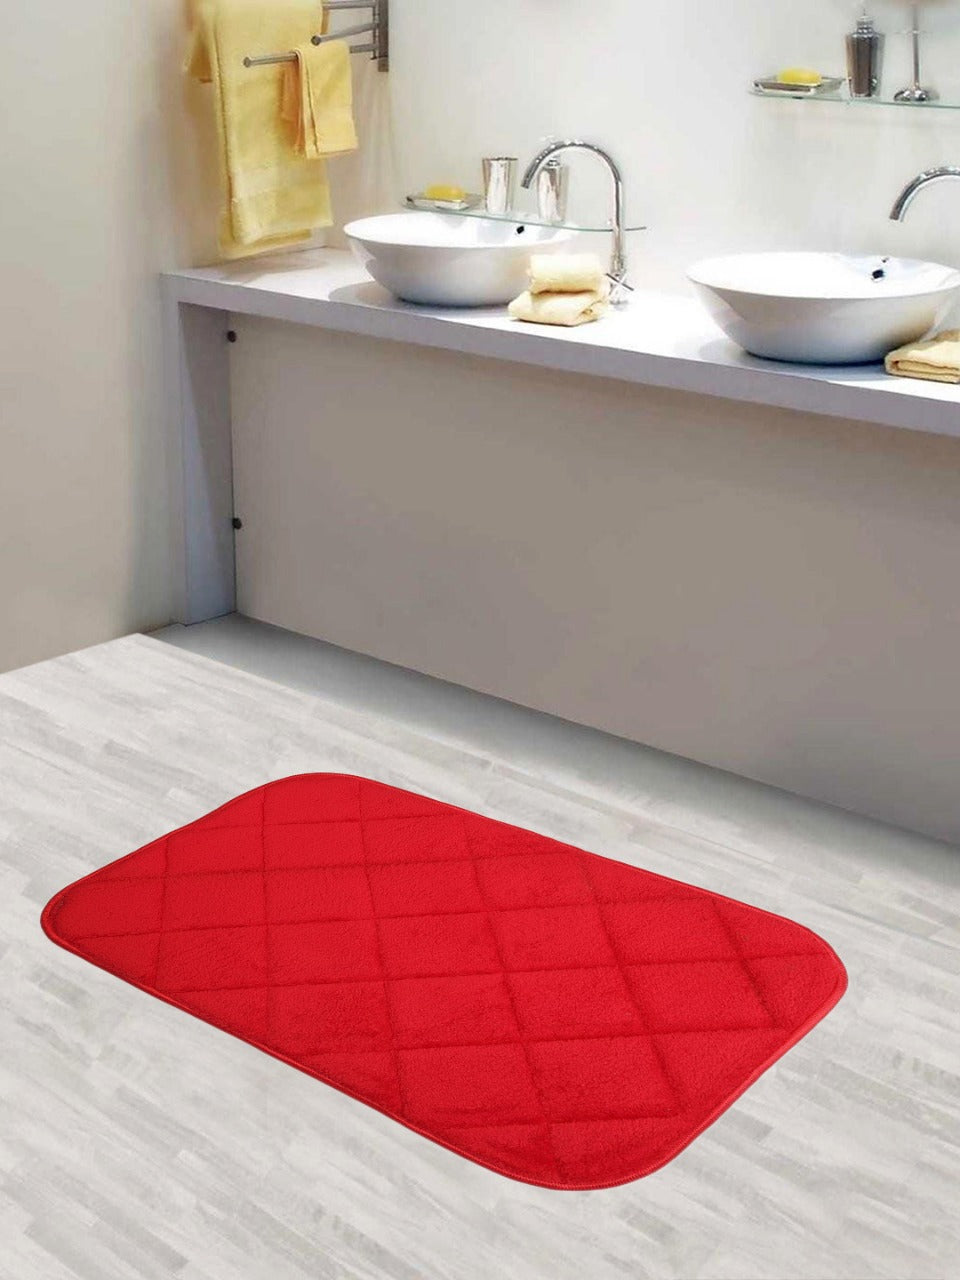 Lushomes bathroom mat, Red Anti Slip Memory Foam bathmat, door mats for bathroom, anti slip mat (Bathmat 12 x 20 inches, Single pc)